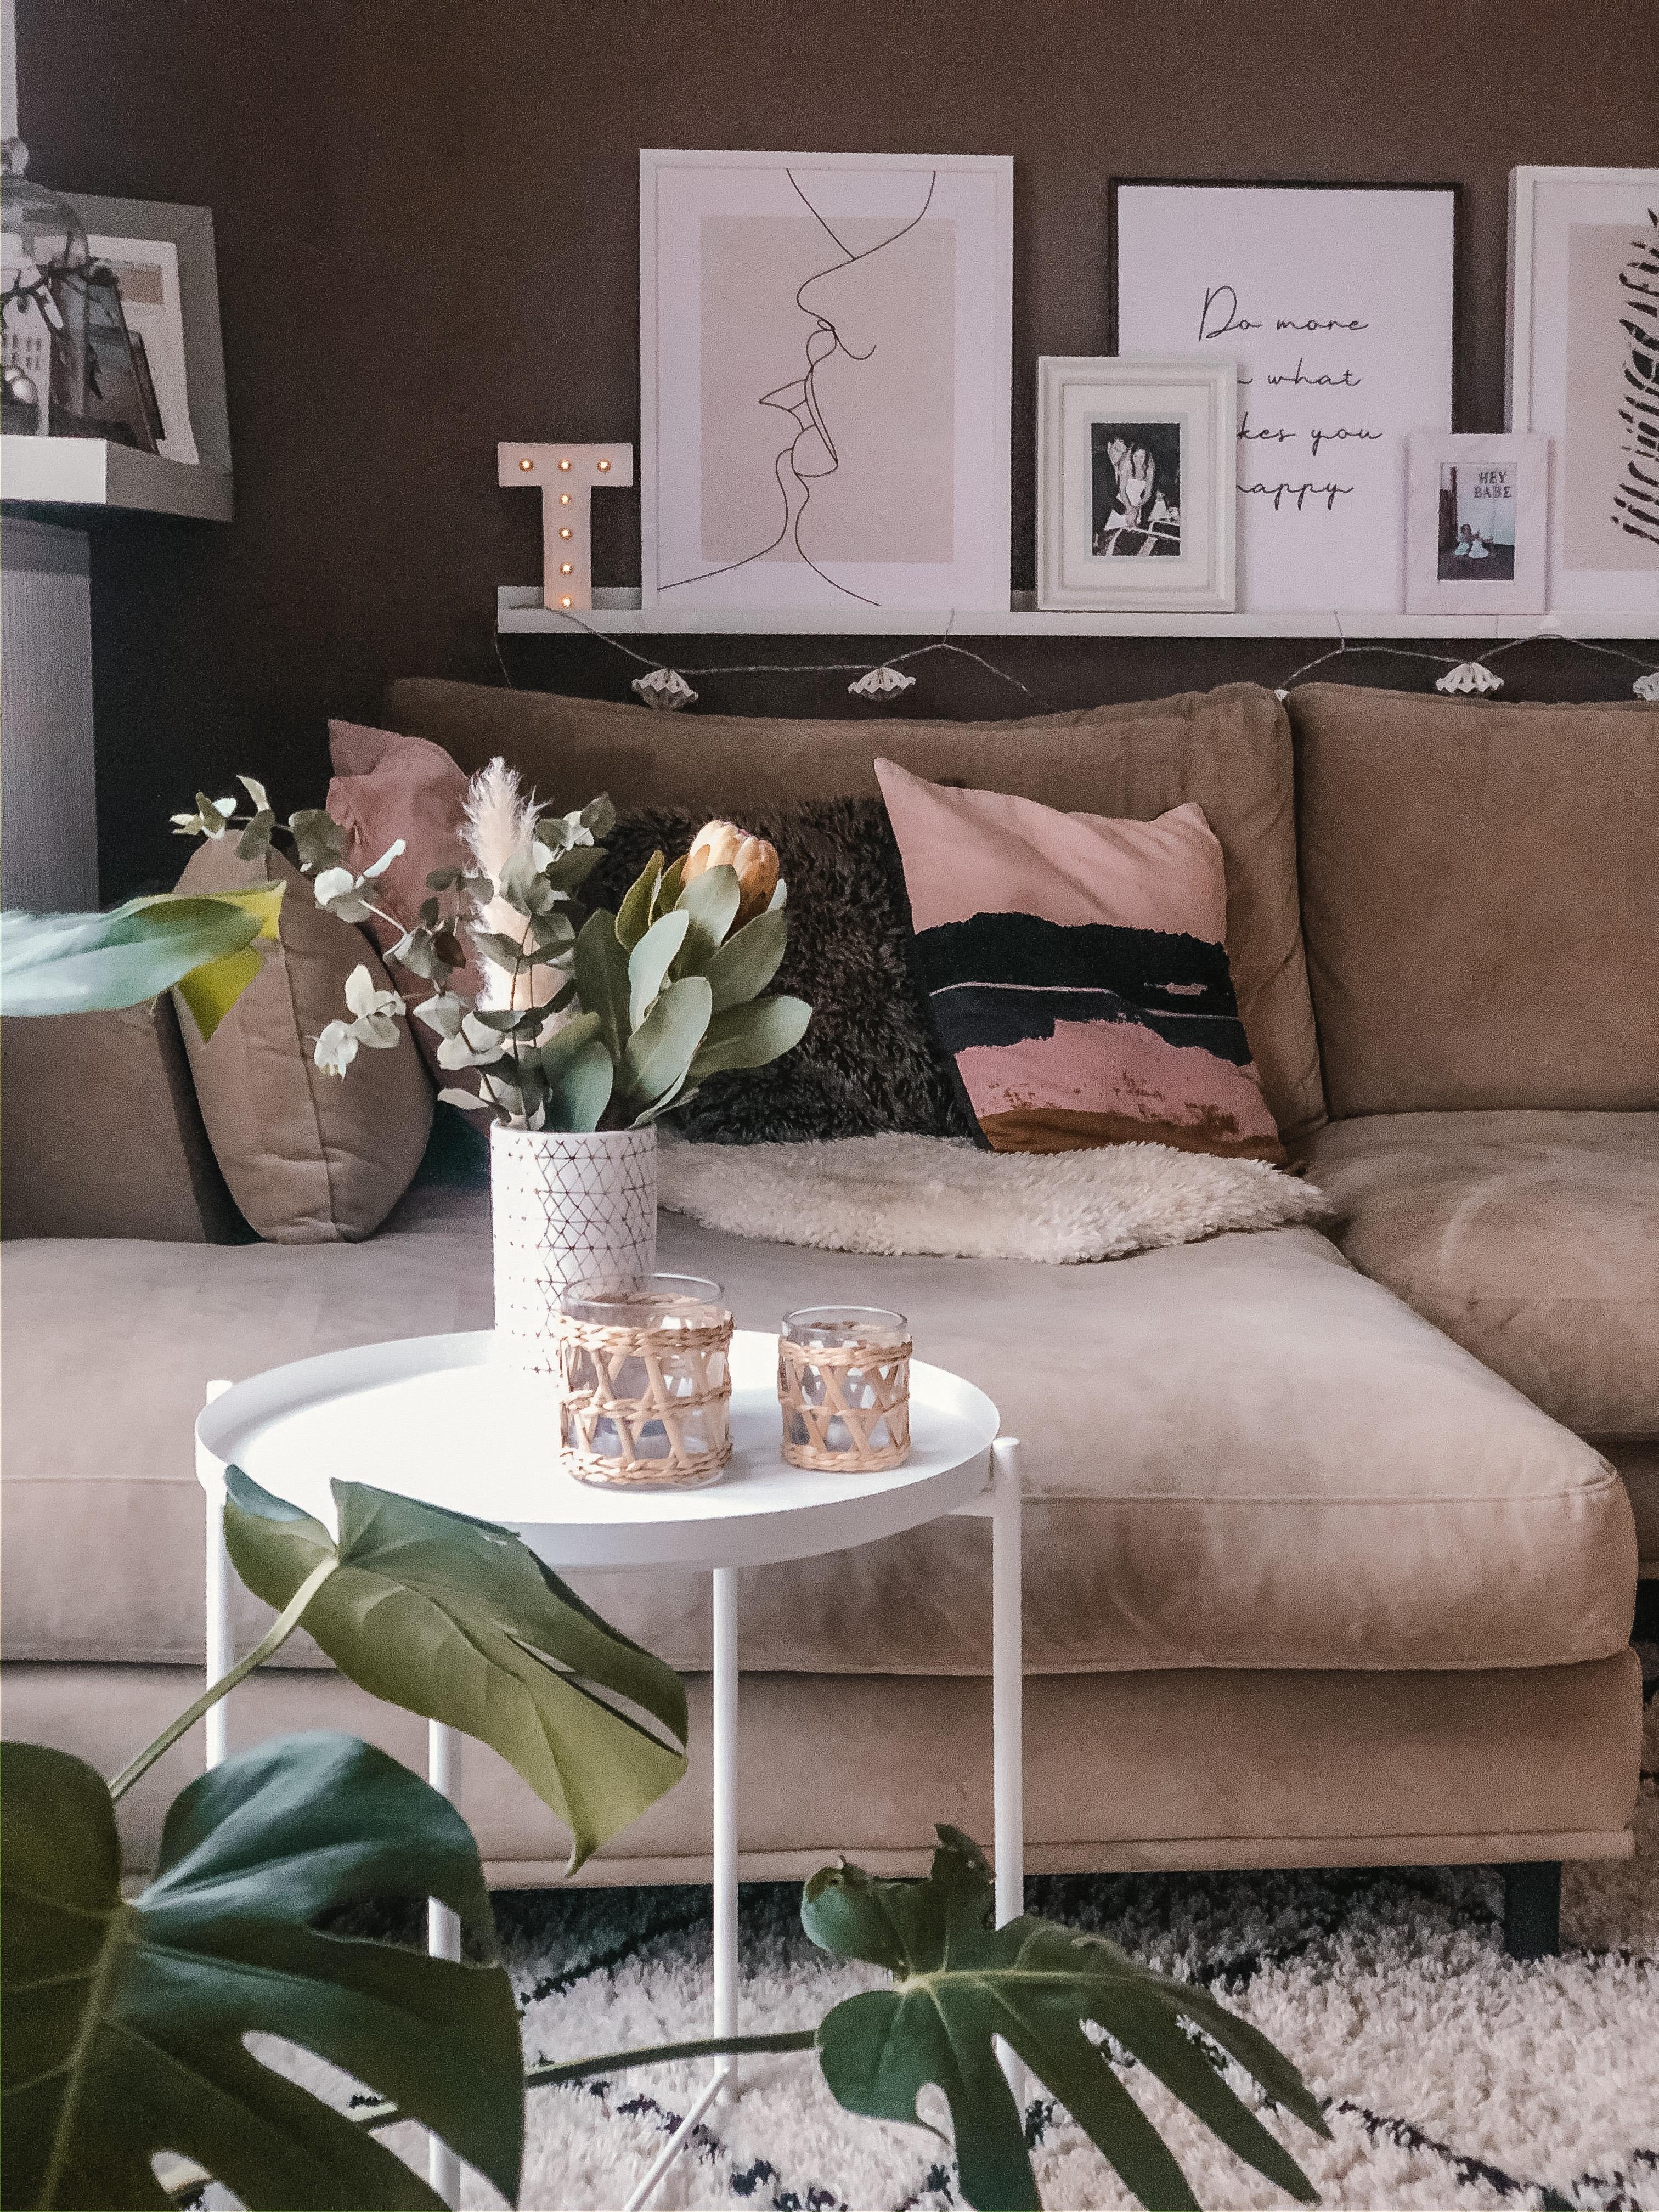 Große Proteenliebe 🌿
#freshflowerfriday #couch #livingroom